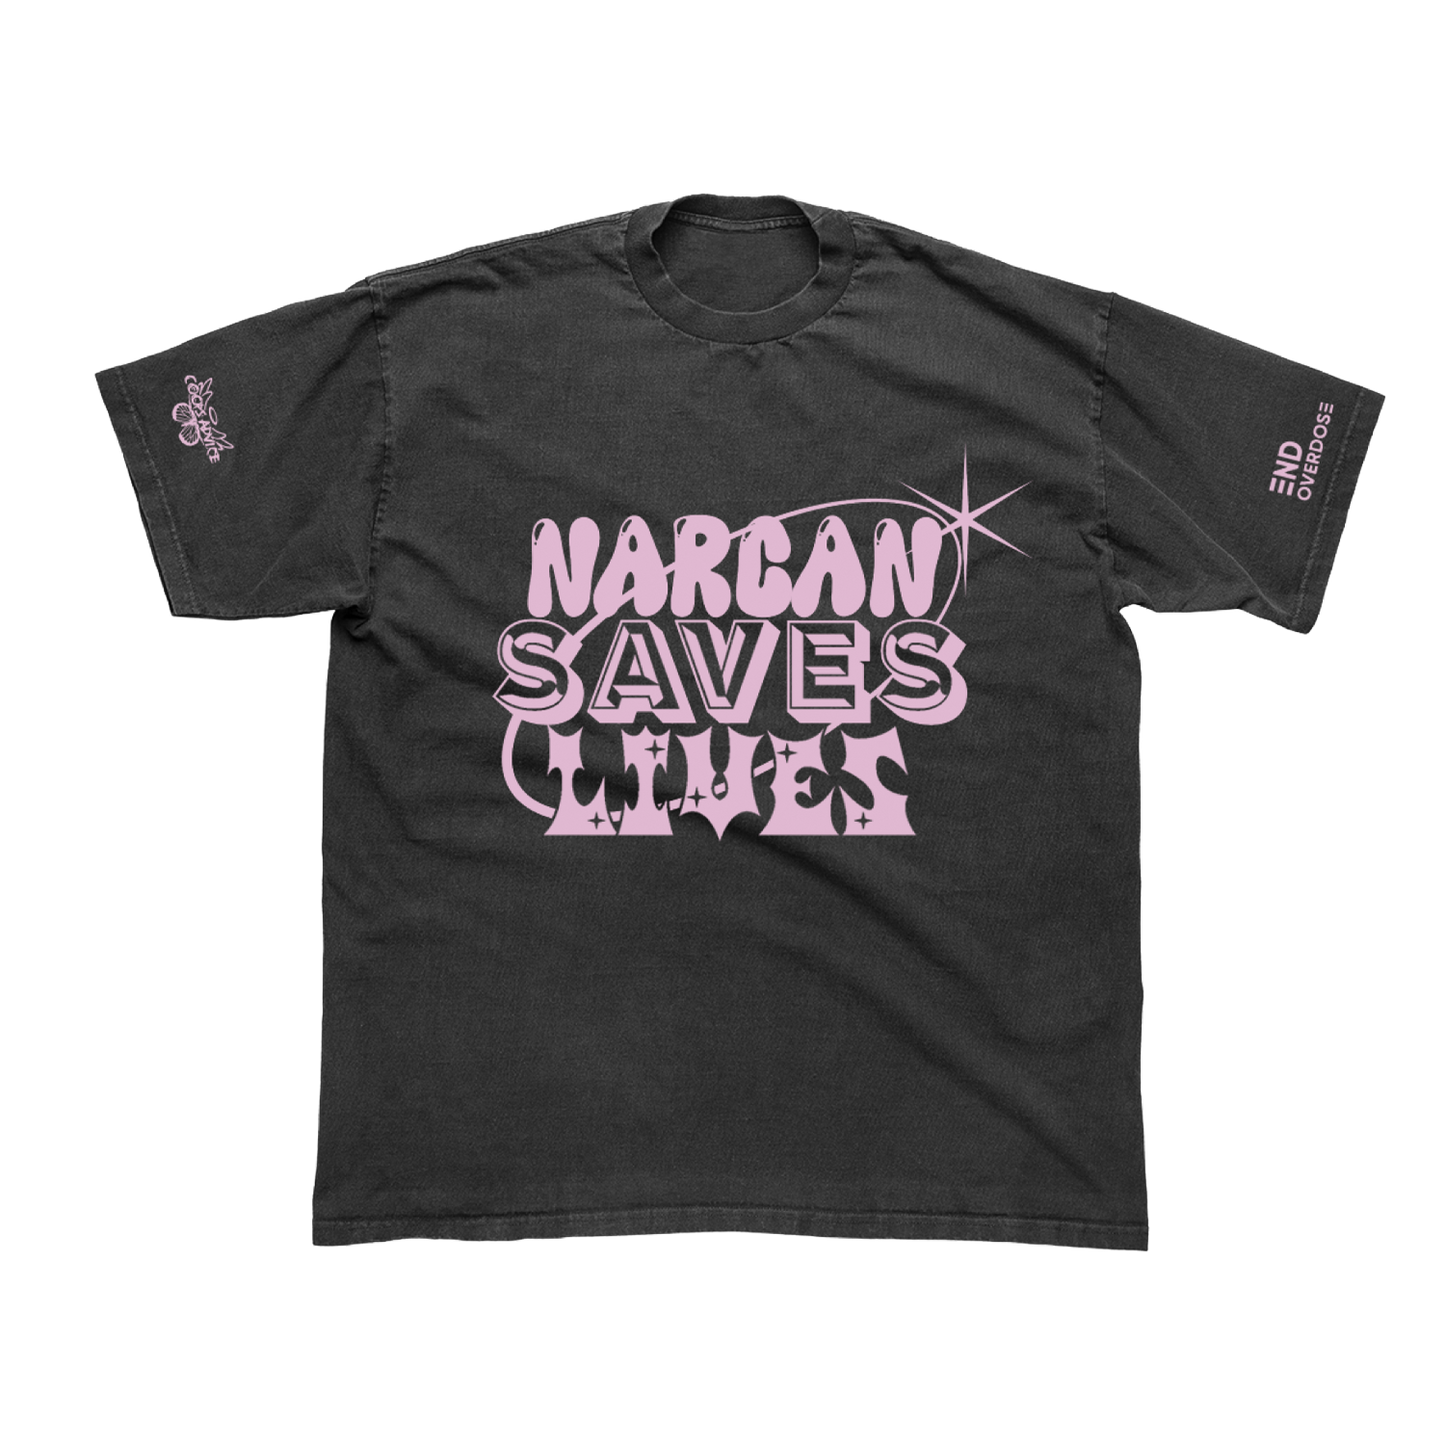 'Narcan Saves Lives' Black Tee